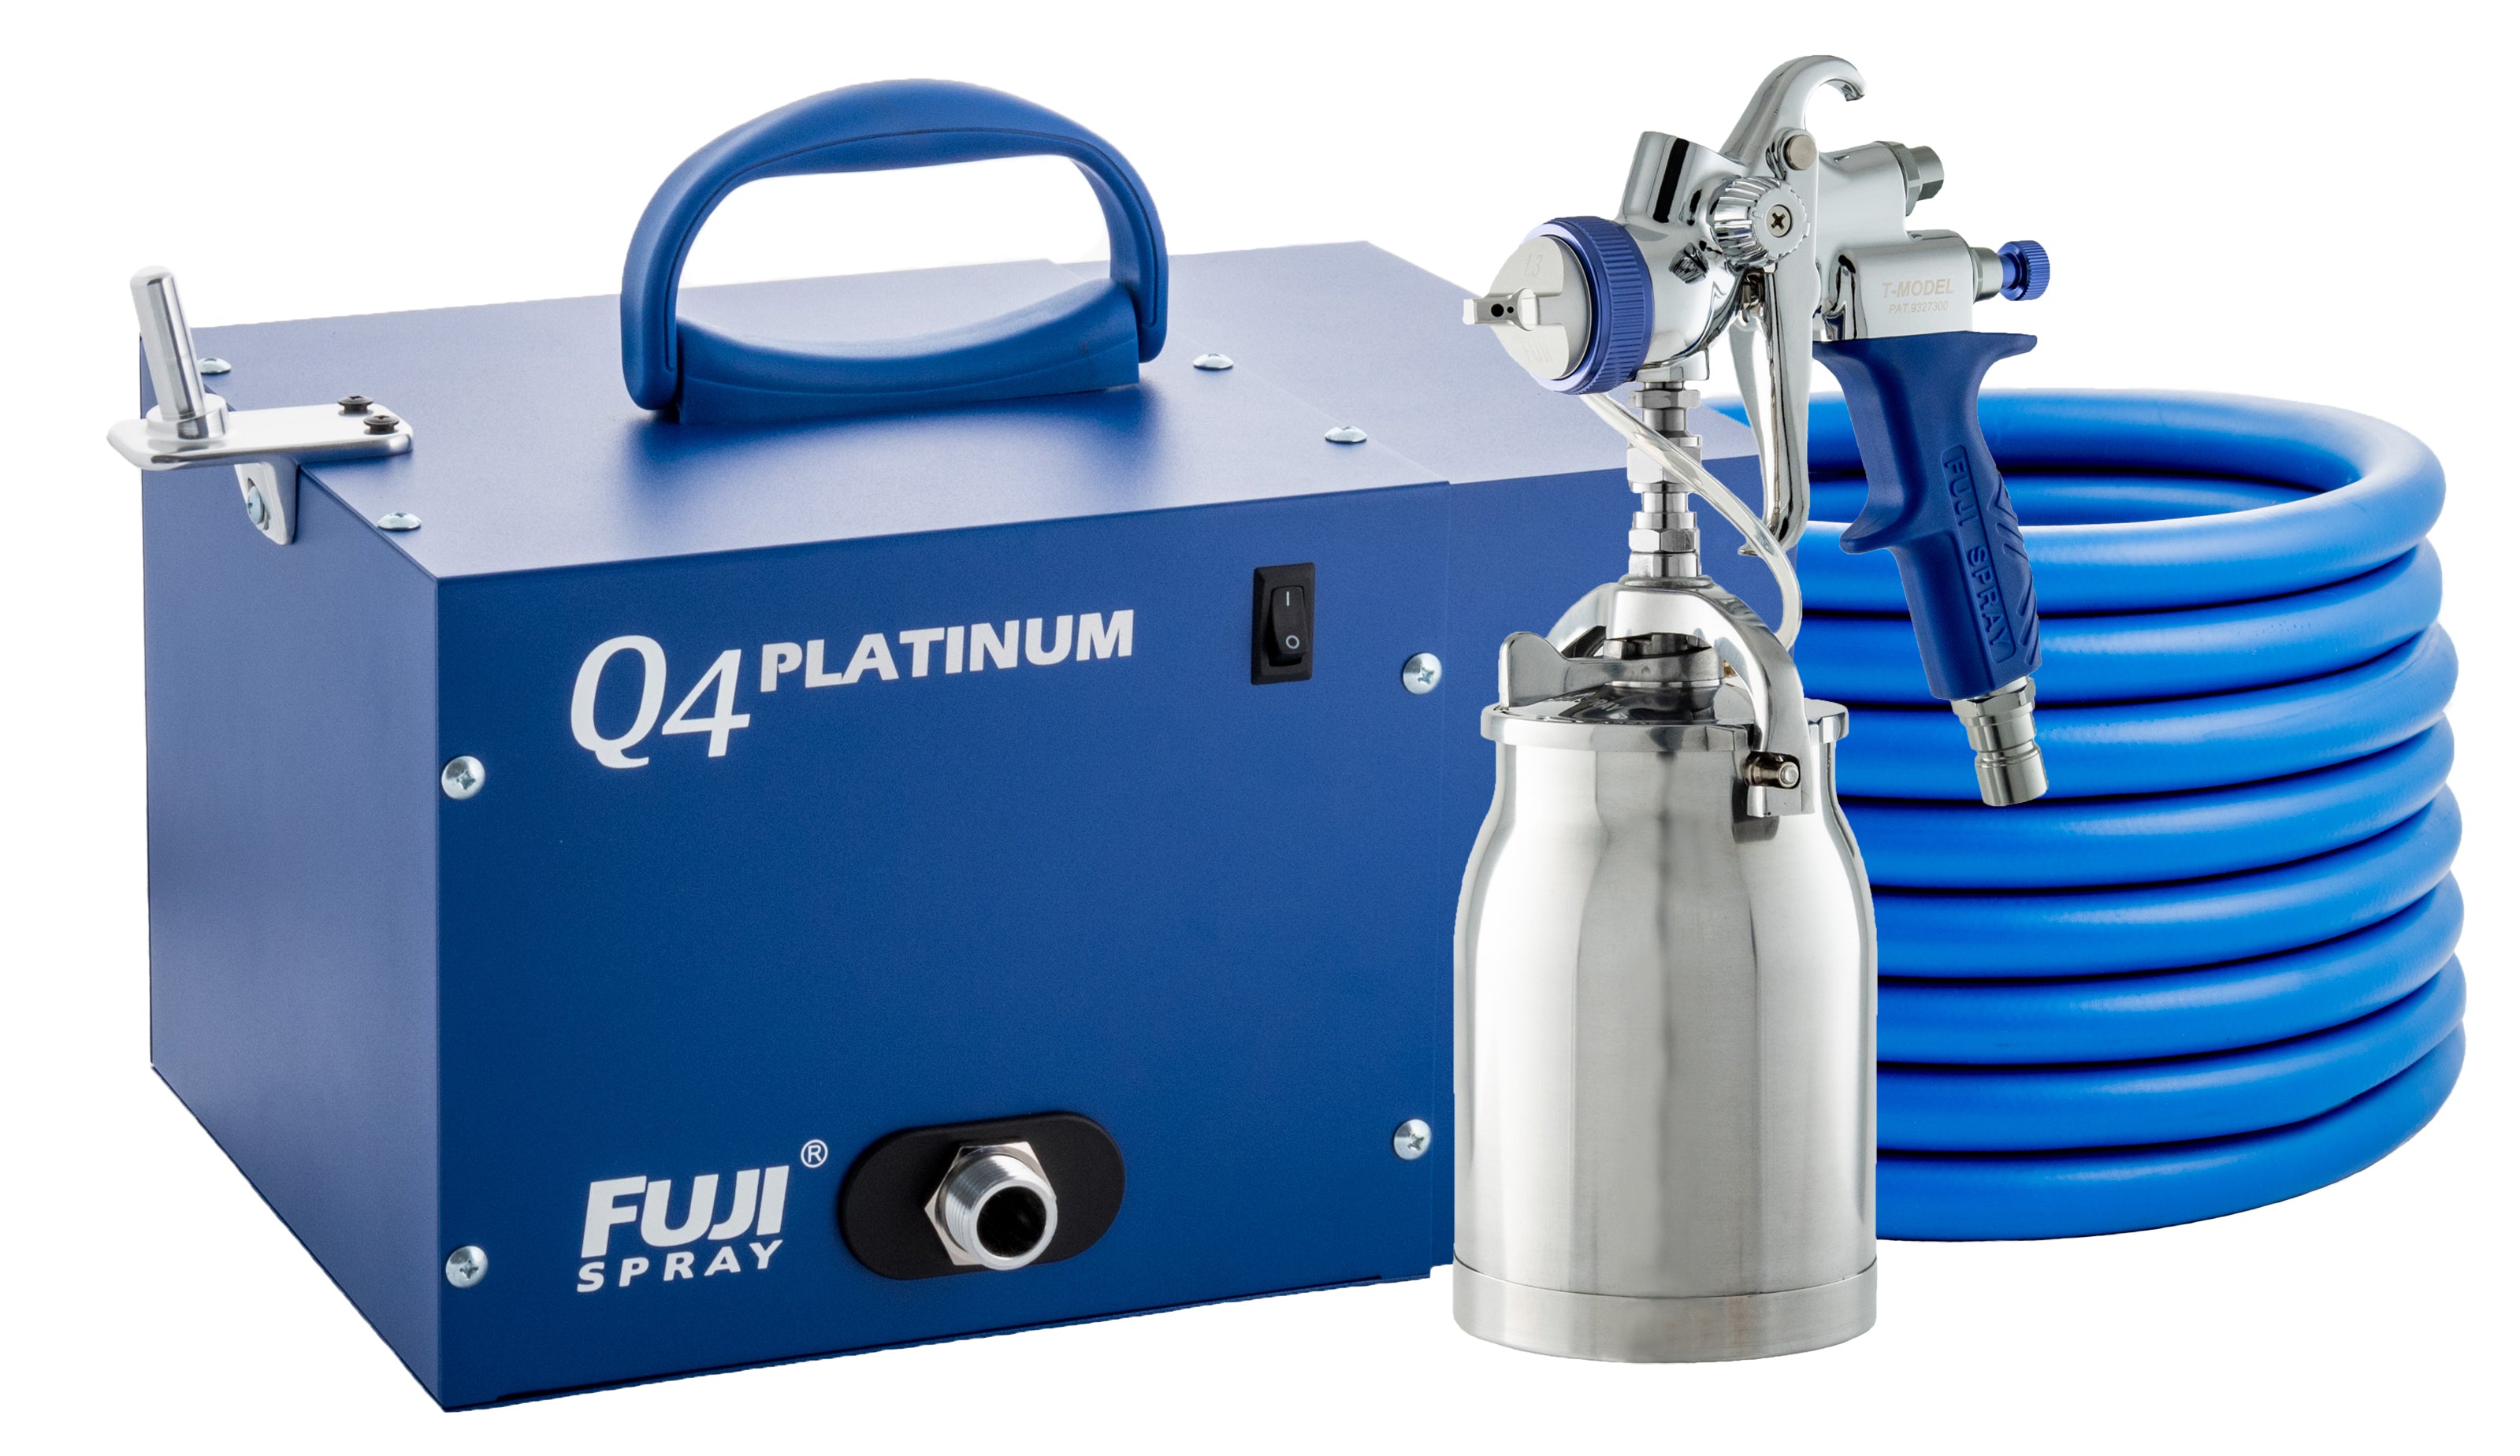 Fuji Spray Q Platinum™ Turbine System with Spray Gun, Hose, and Turbine